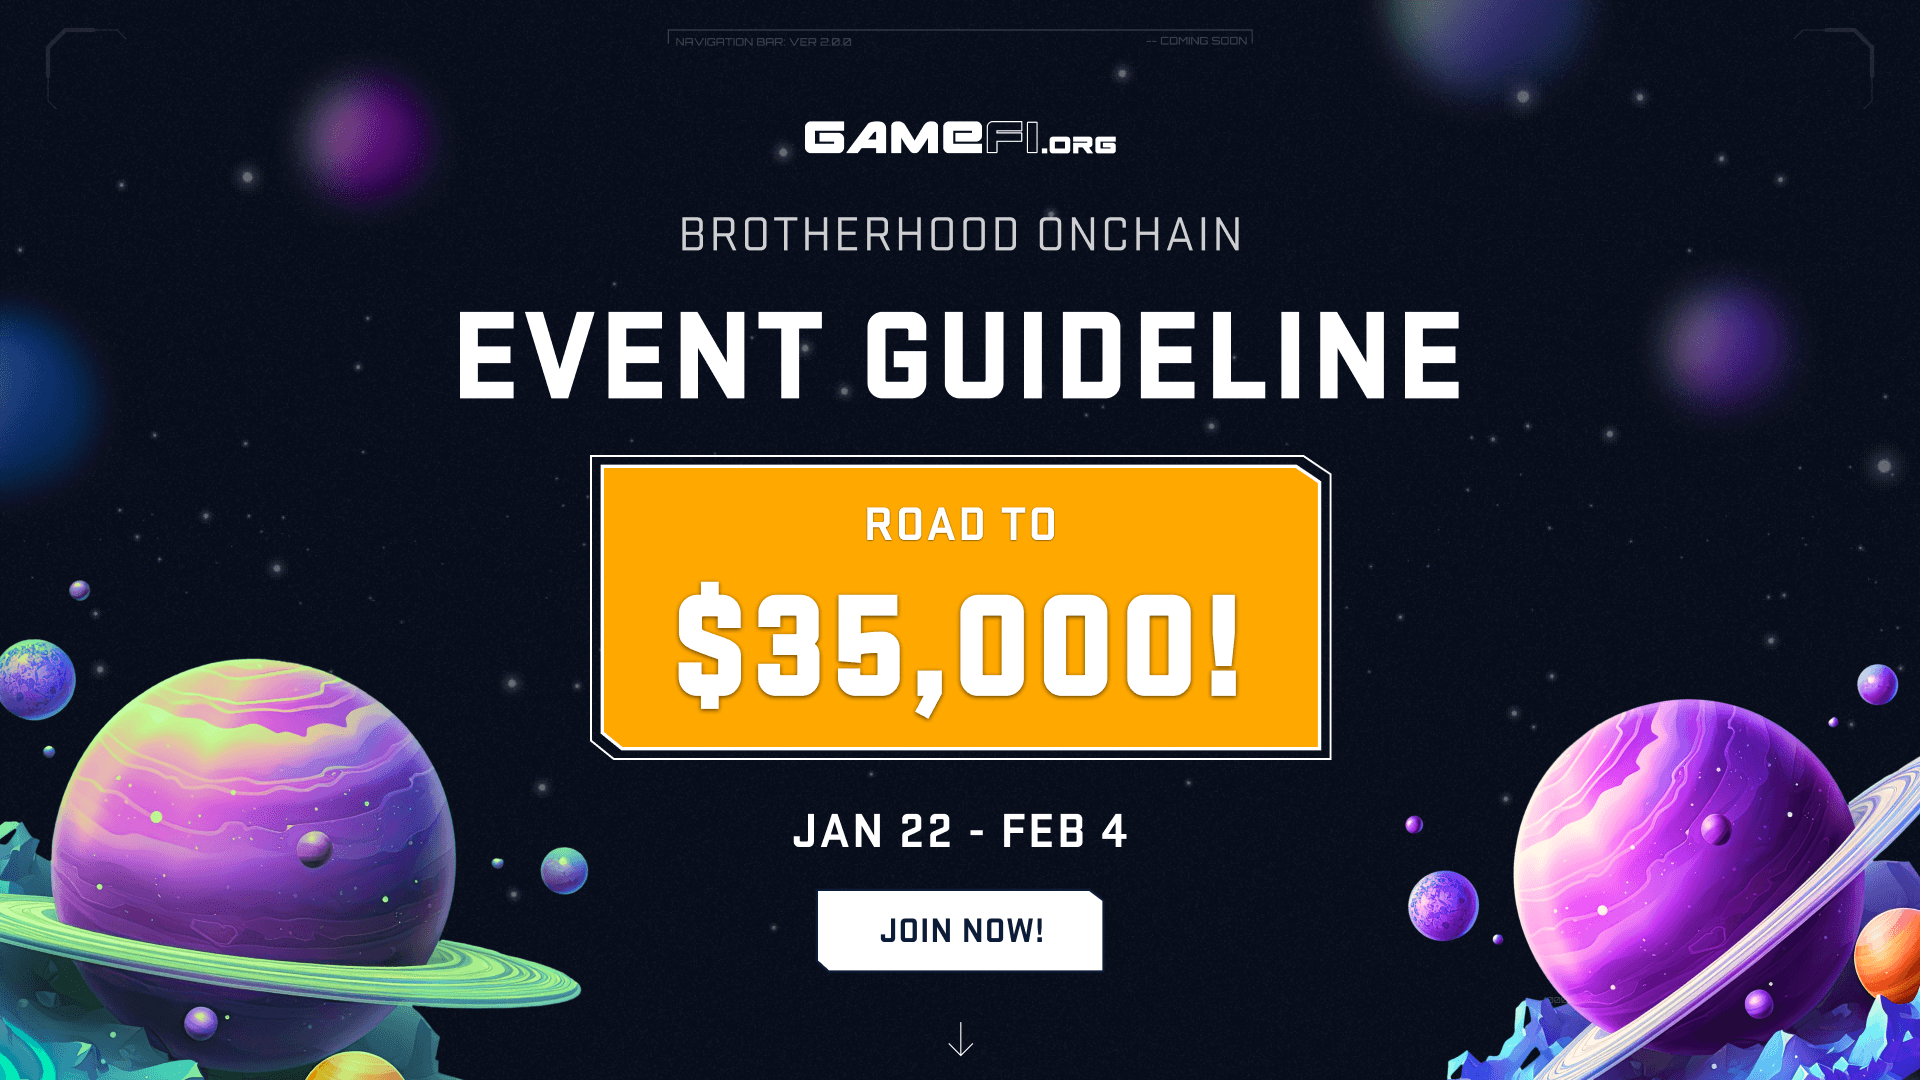 Users Guideline of Brotherhood Onchain: Road to $35,000! 🎯